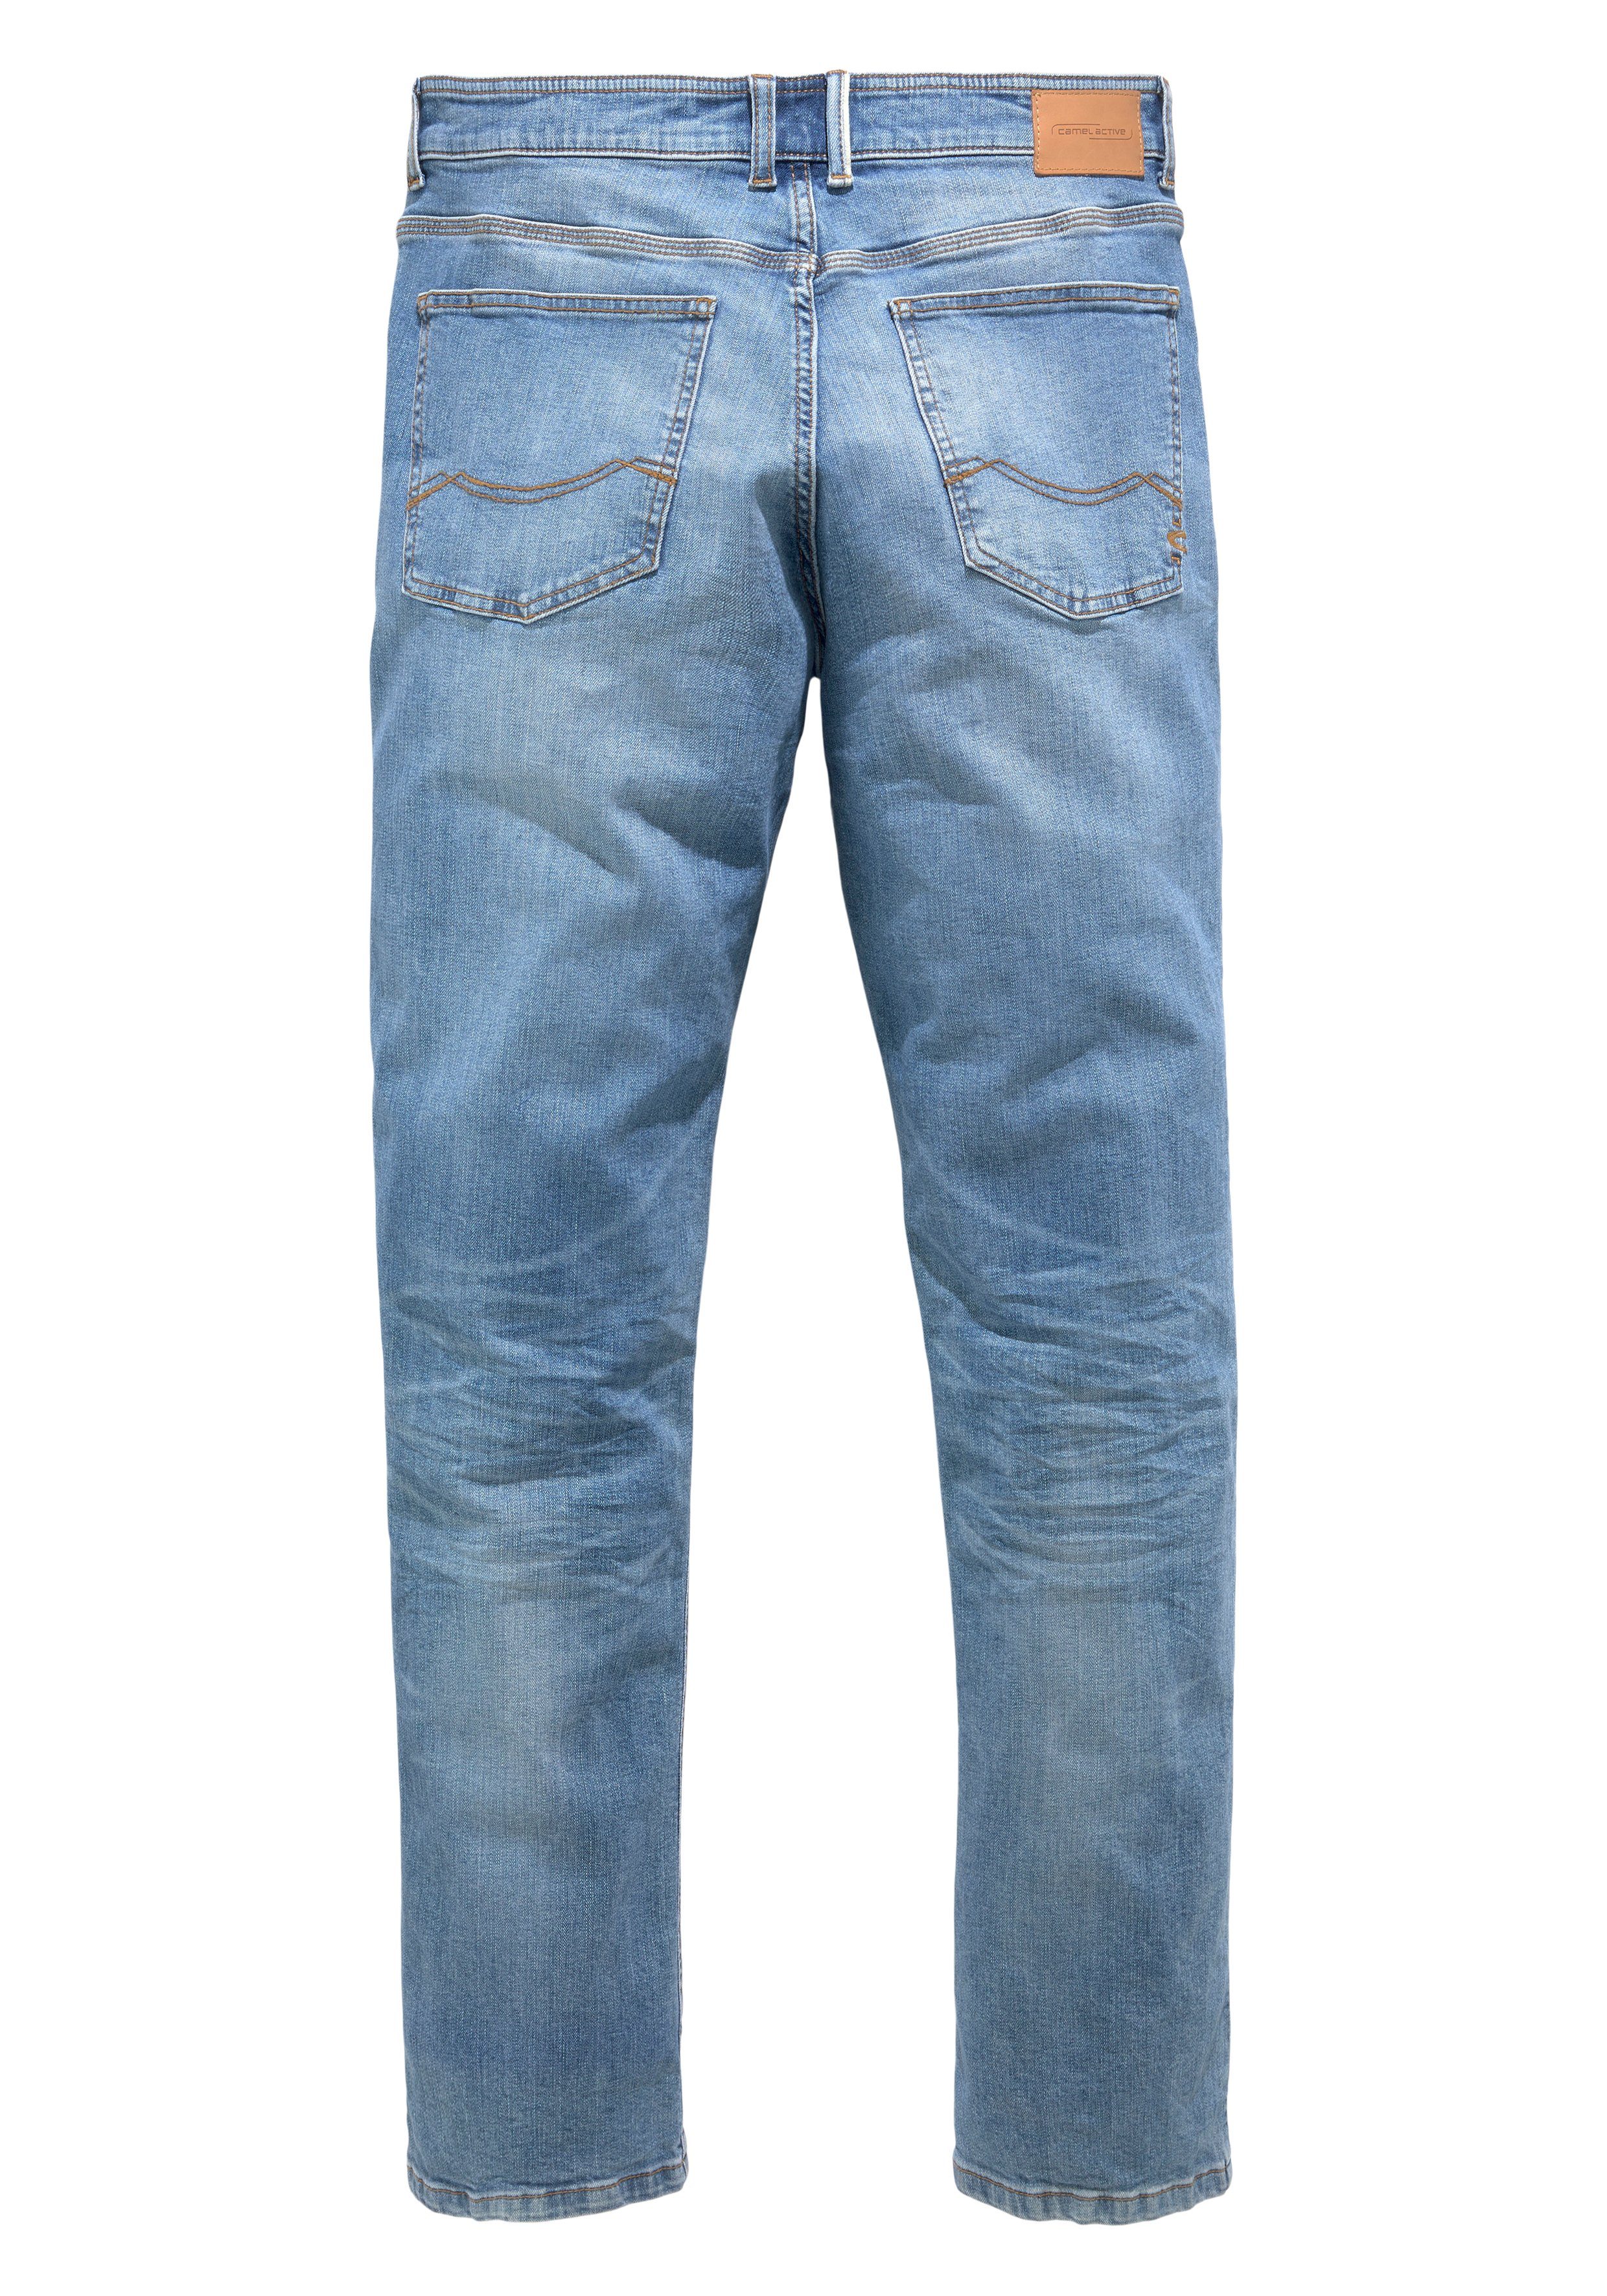 WOODSTOCK 5-Pocket-Jeans active ocean-blue camel